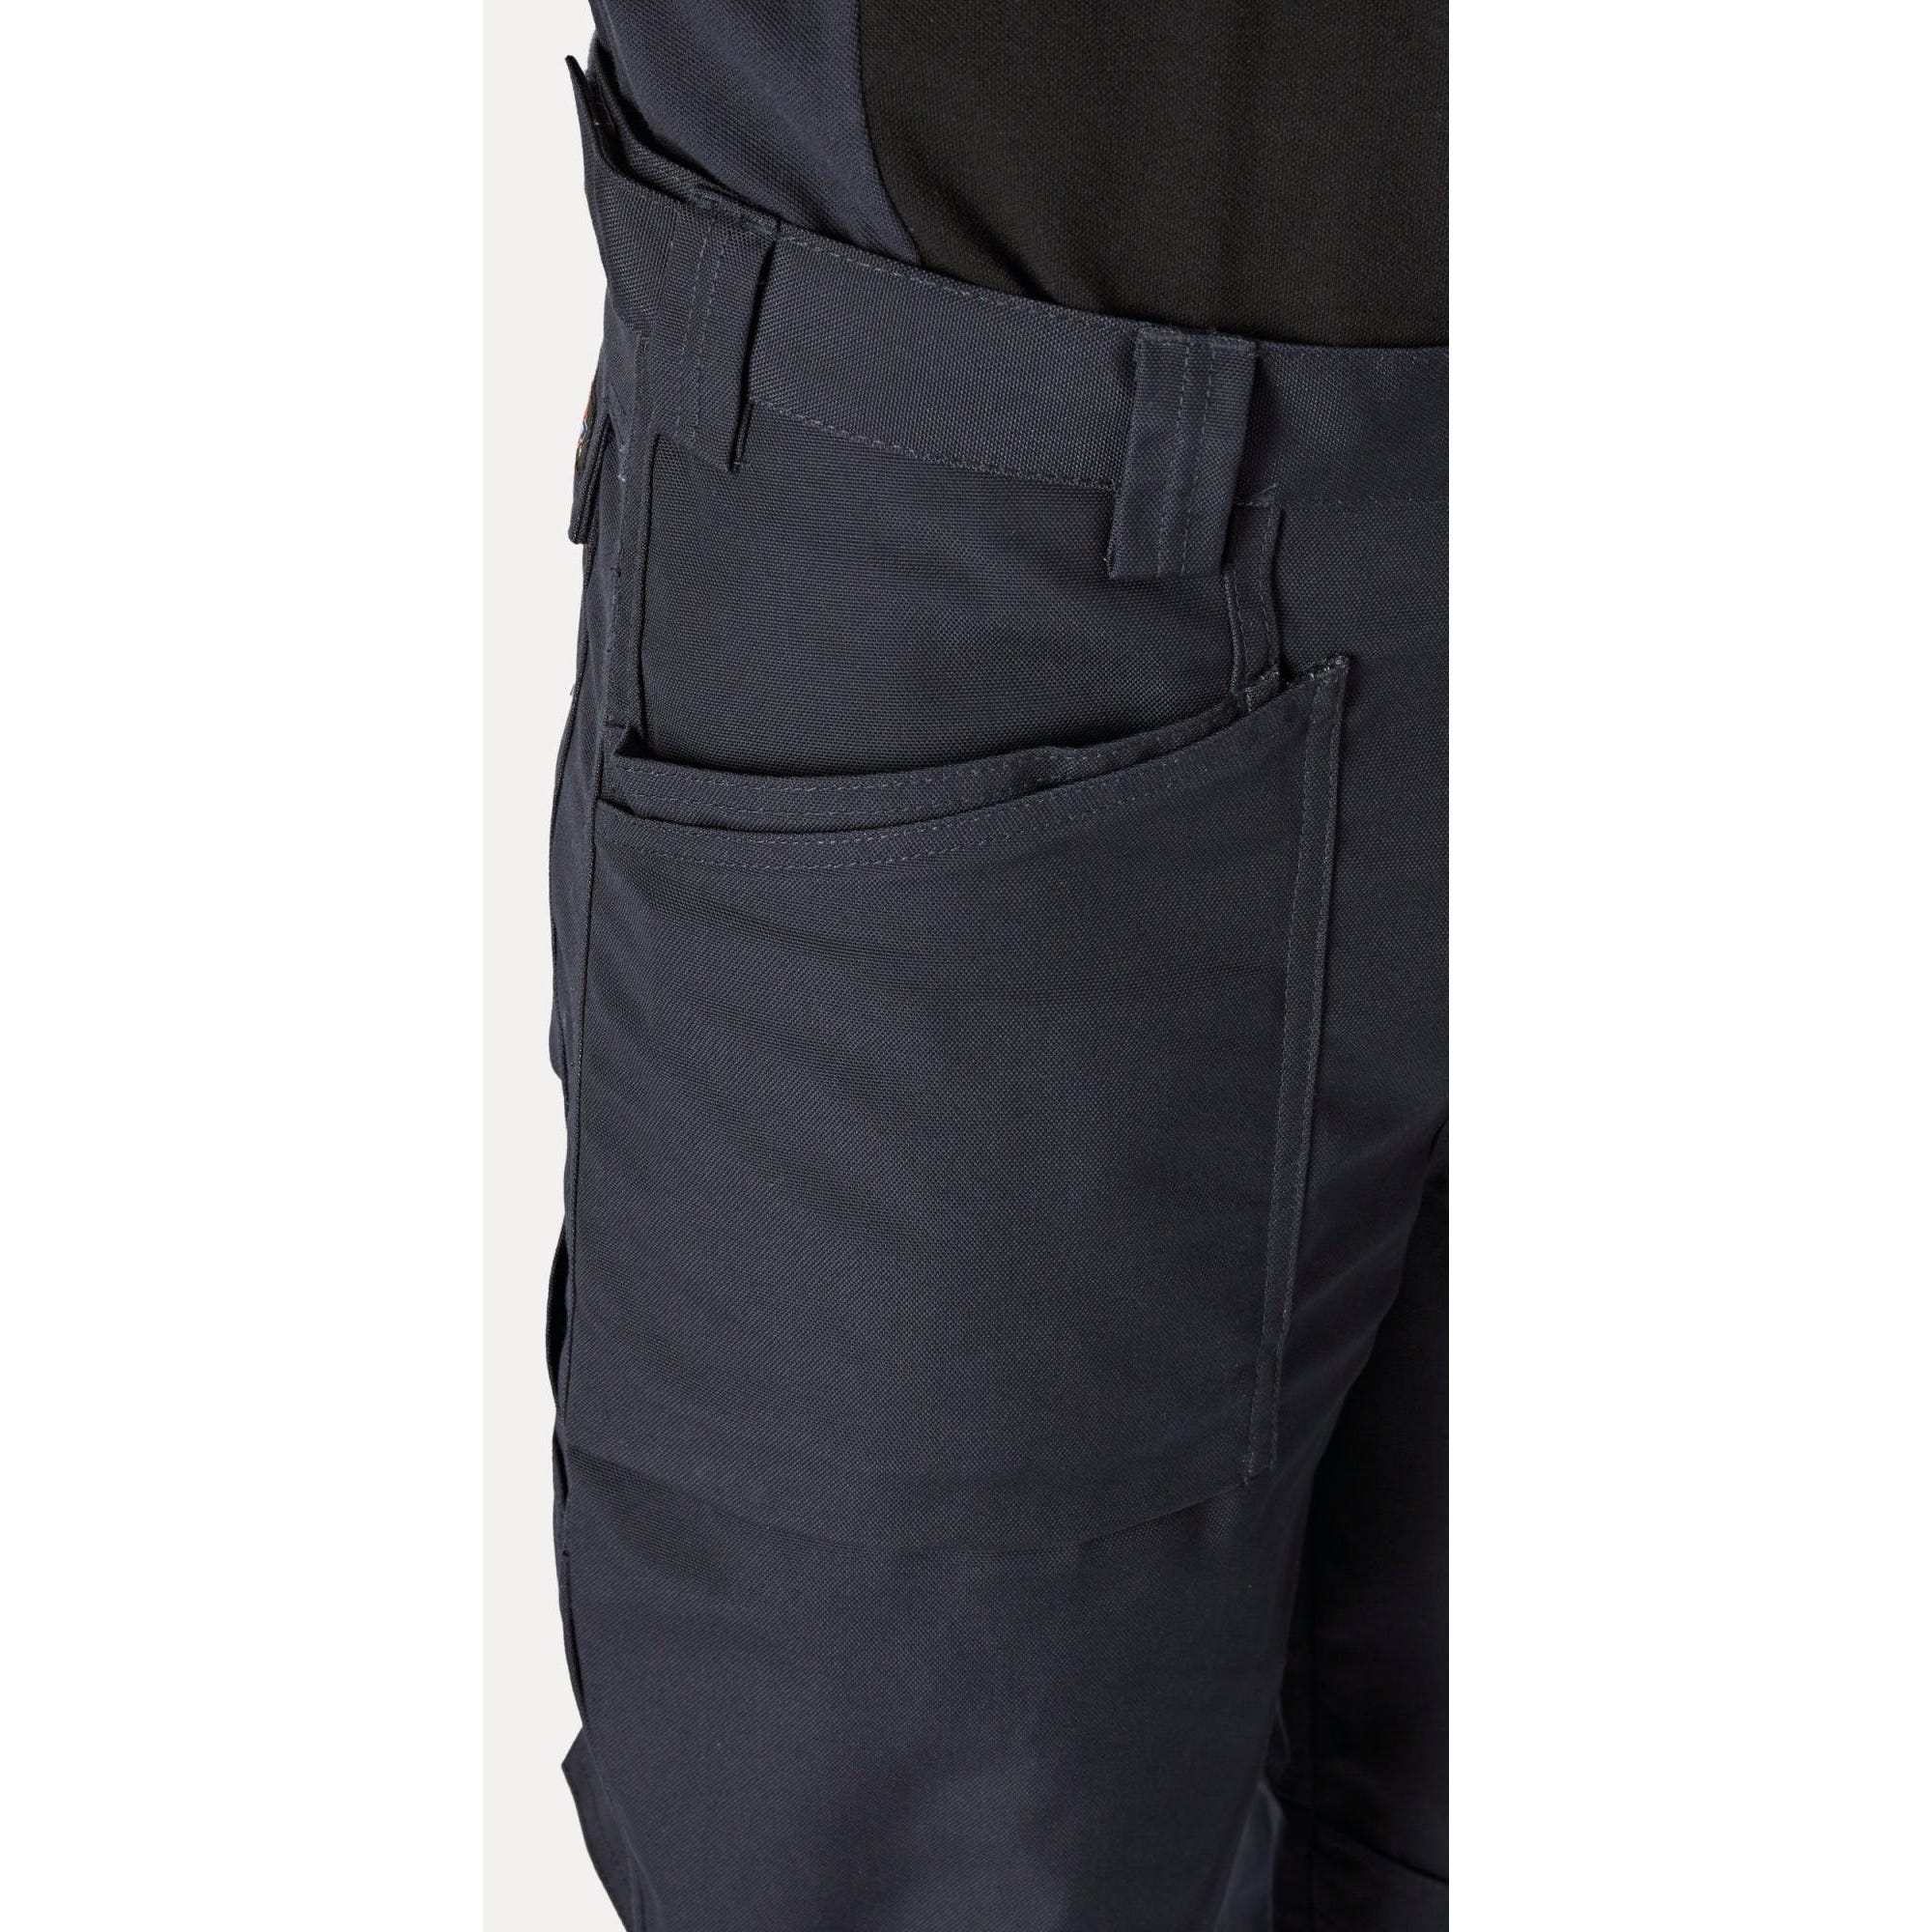 Pantalon Eisenhower multi-poches Bleu marine - Dickies - Taille 42 8